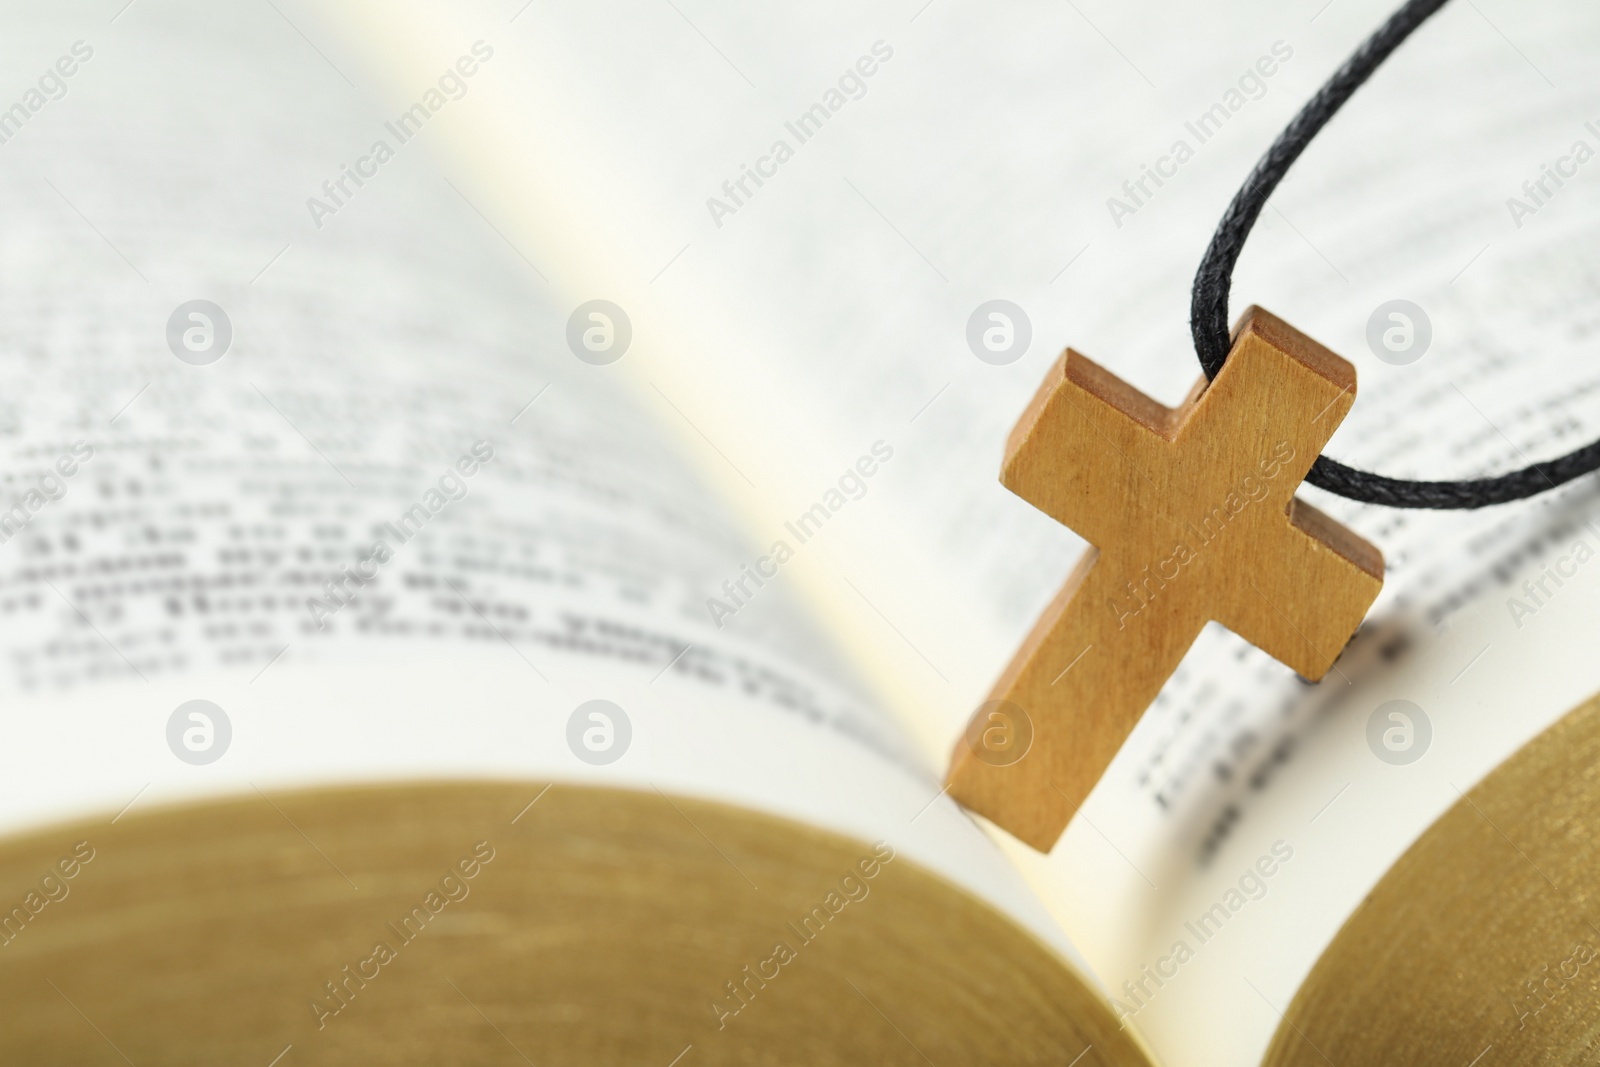 Photo of Christian cross on open Bible, closeup view